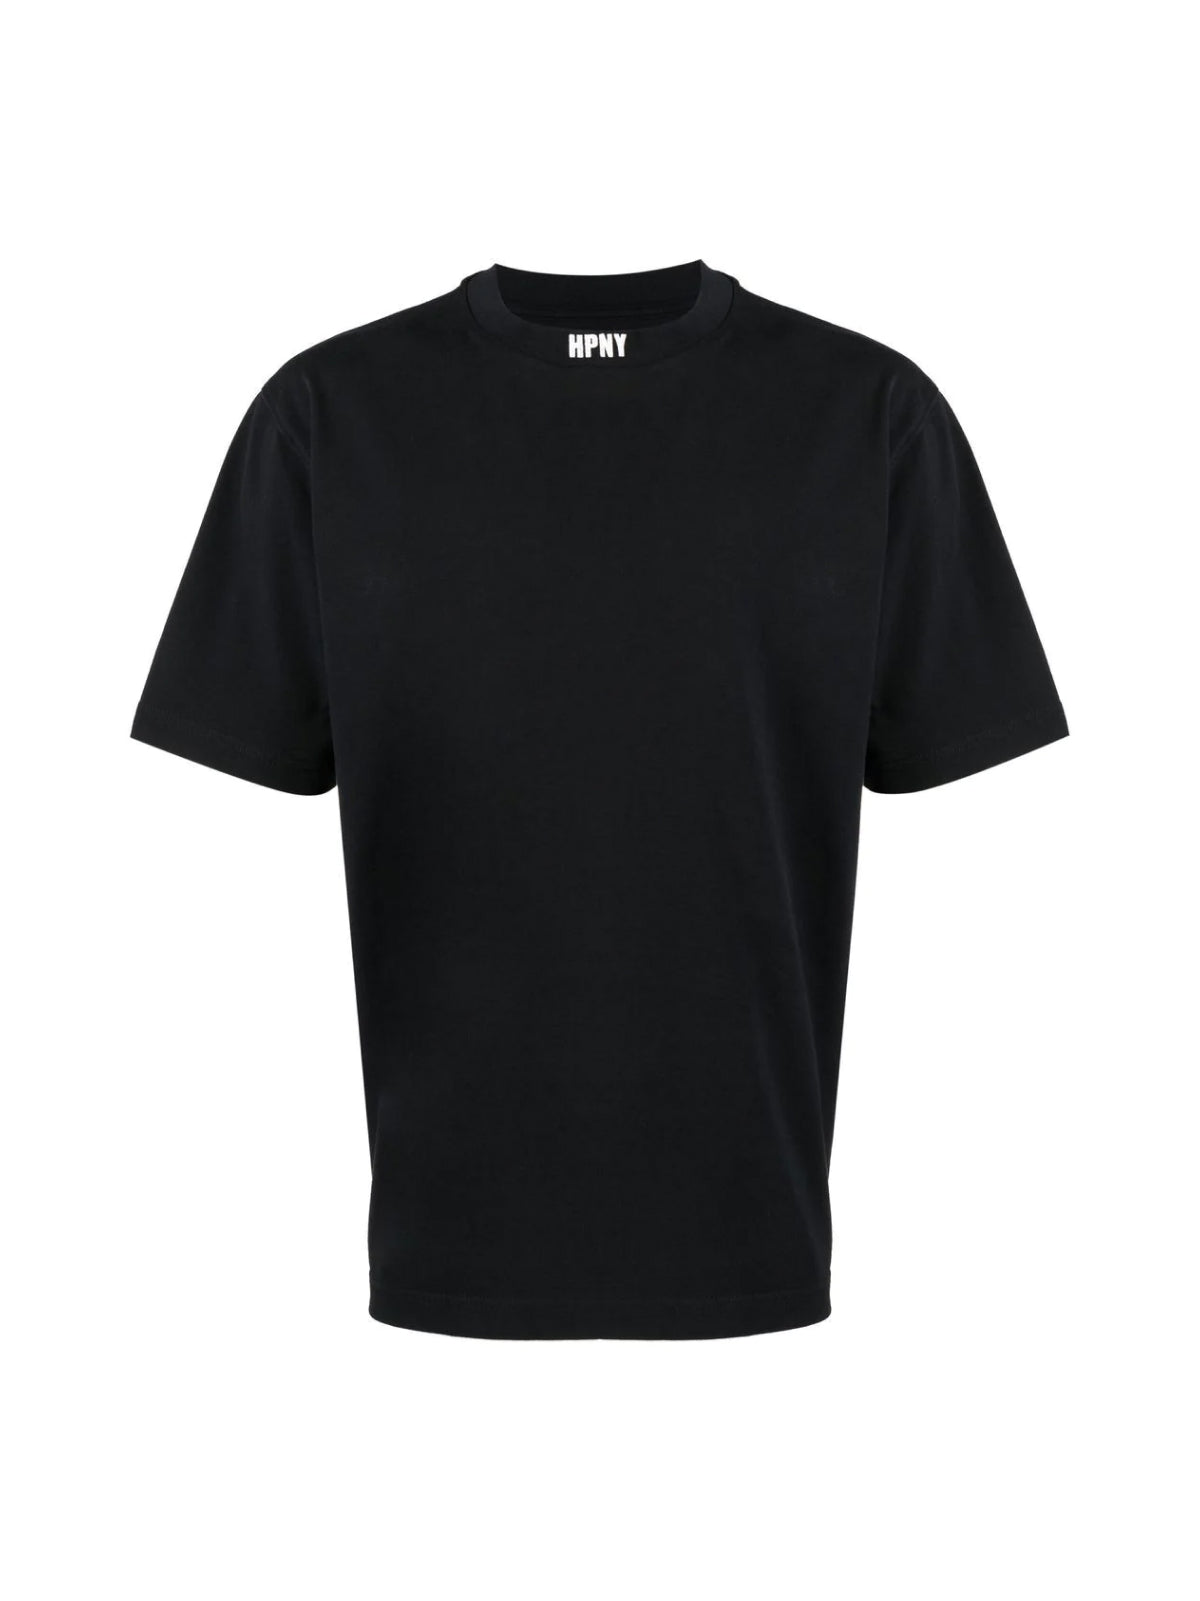 Heron Preston-OUTLET-SALE-HPNY Logo T-Shirt-ARCHIVIST